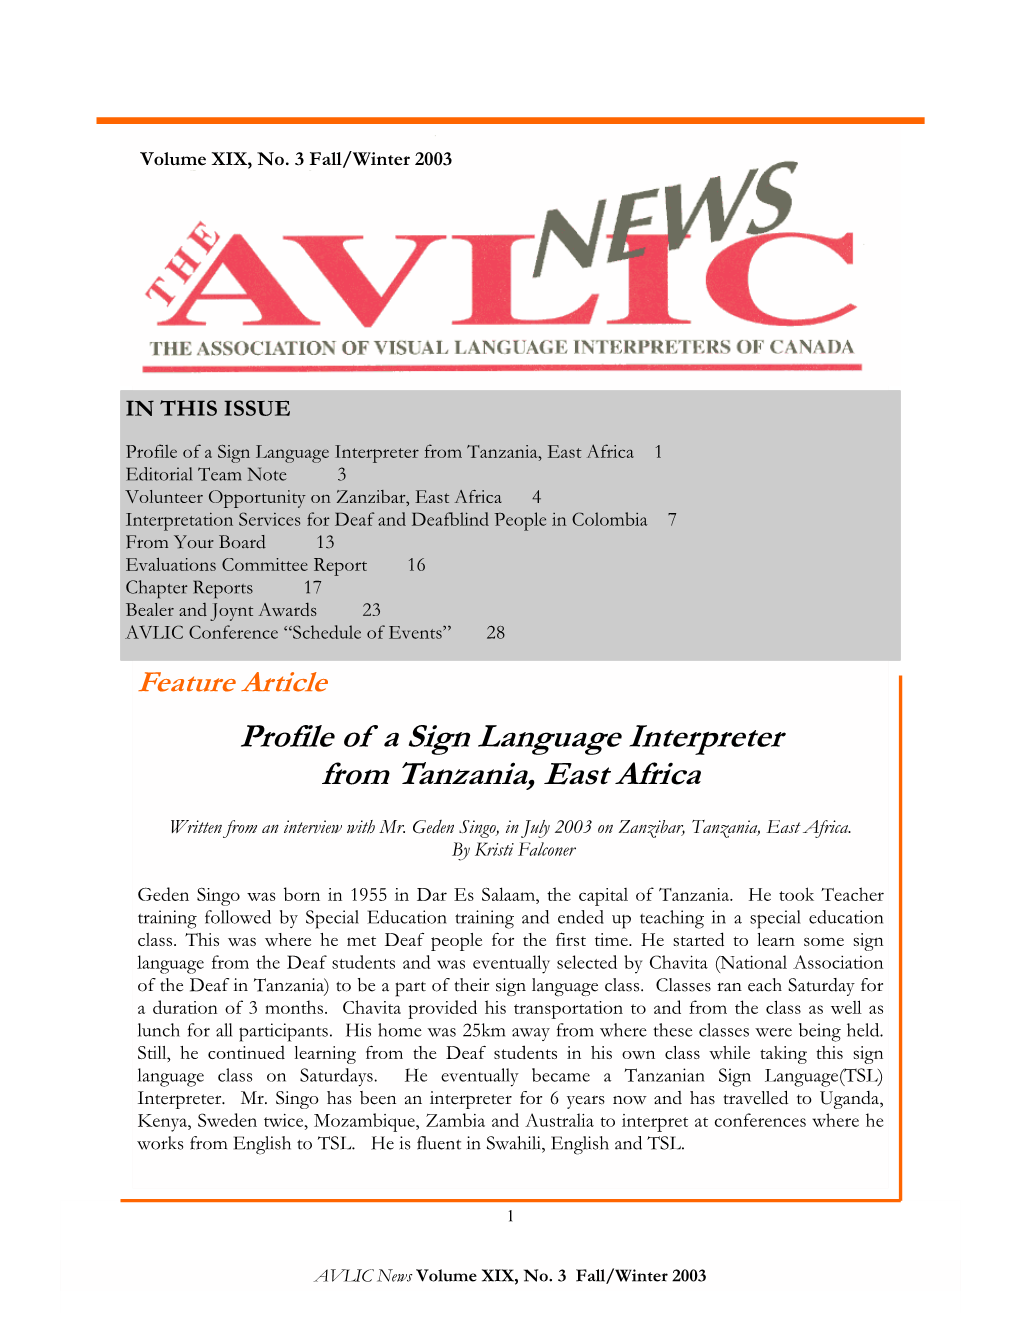 AVLIC News Dec 03.Pub